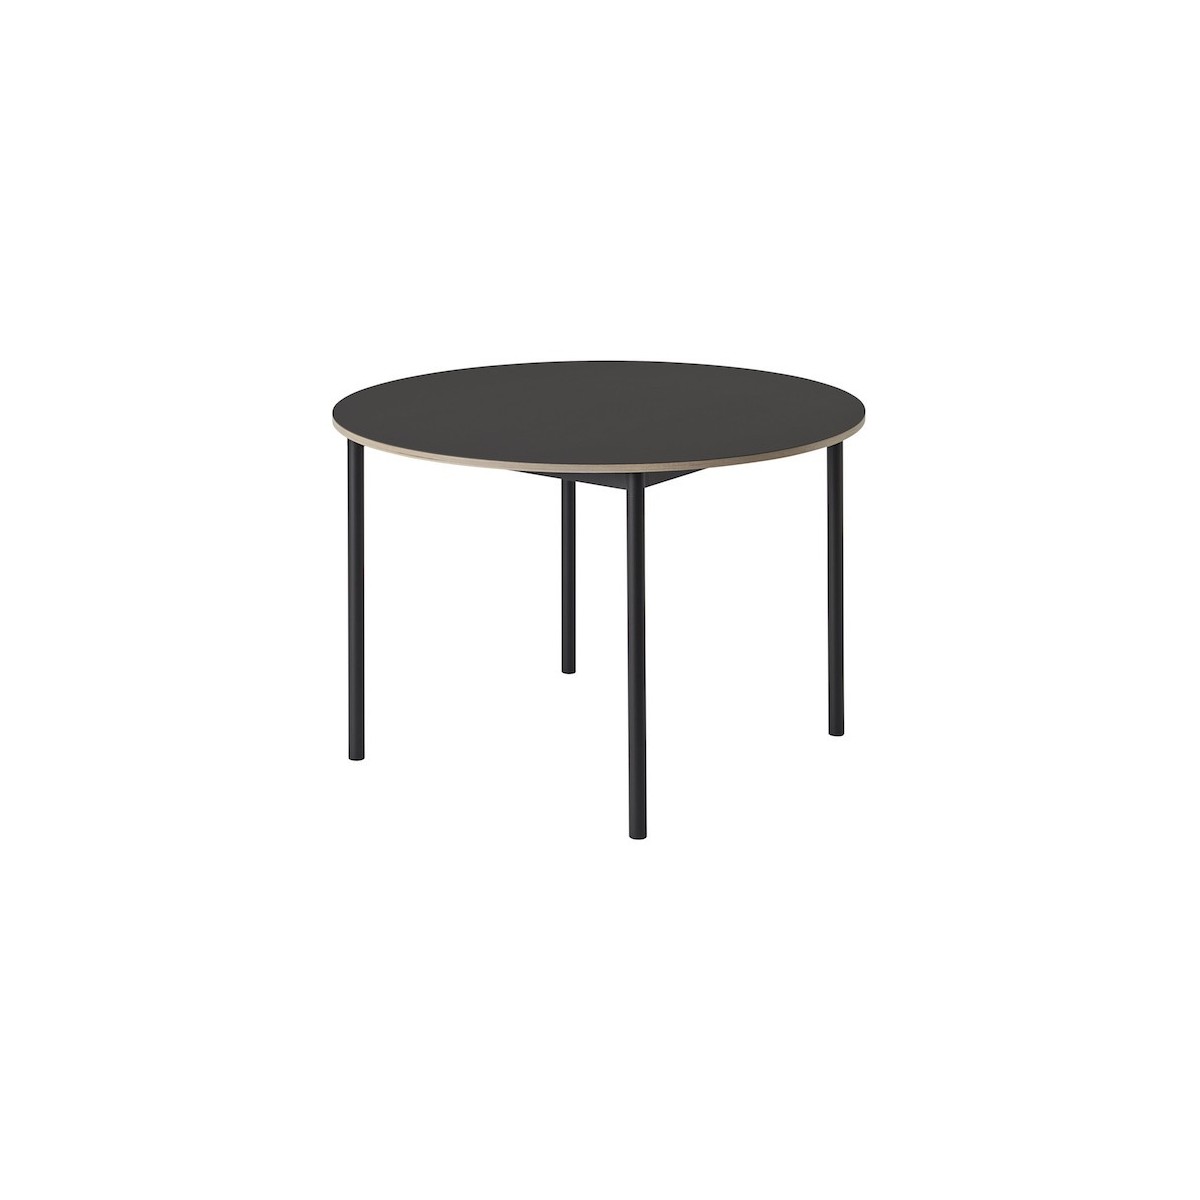 lino noir + bord placage + base noire - table Base ronde